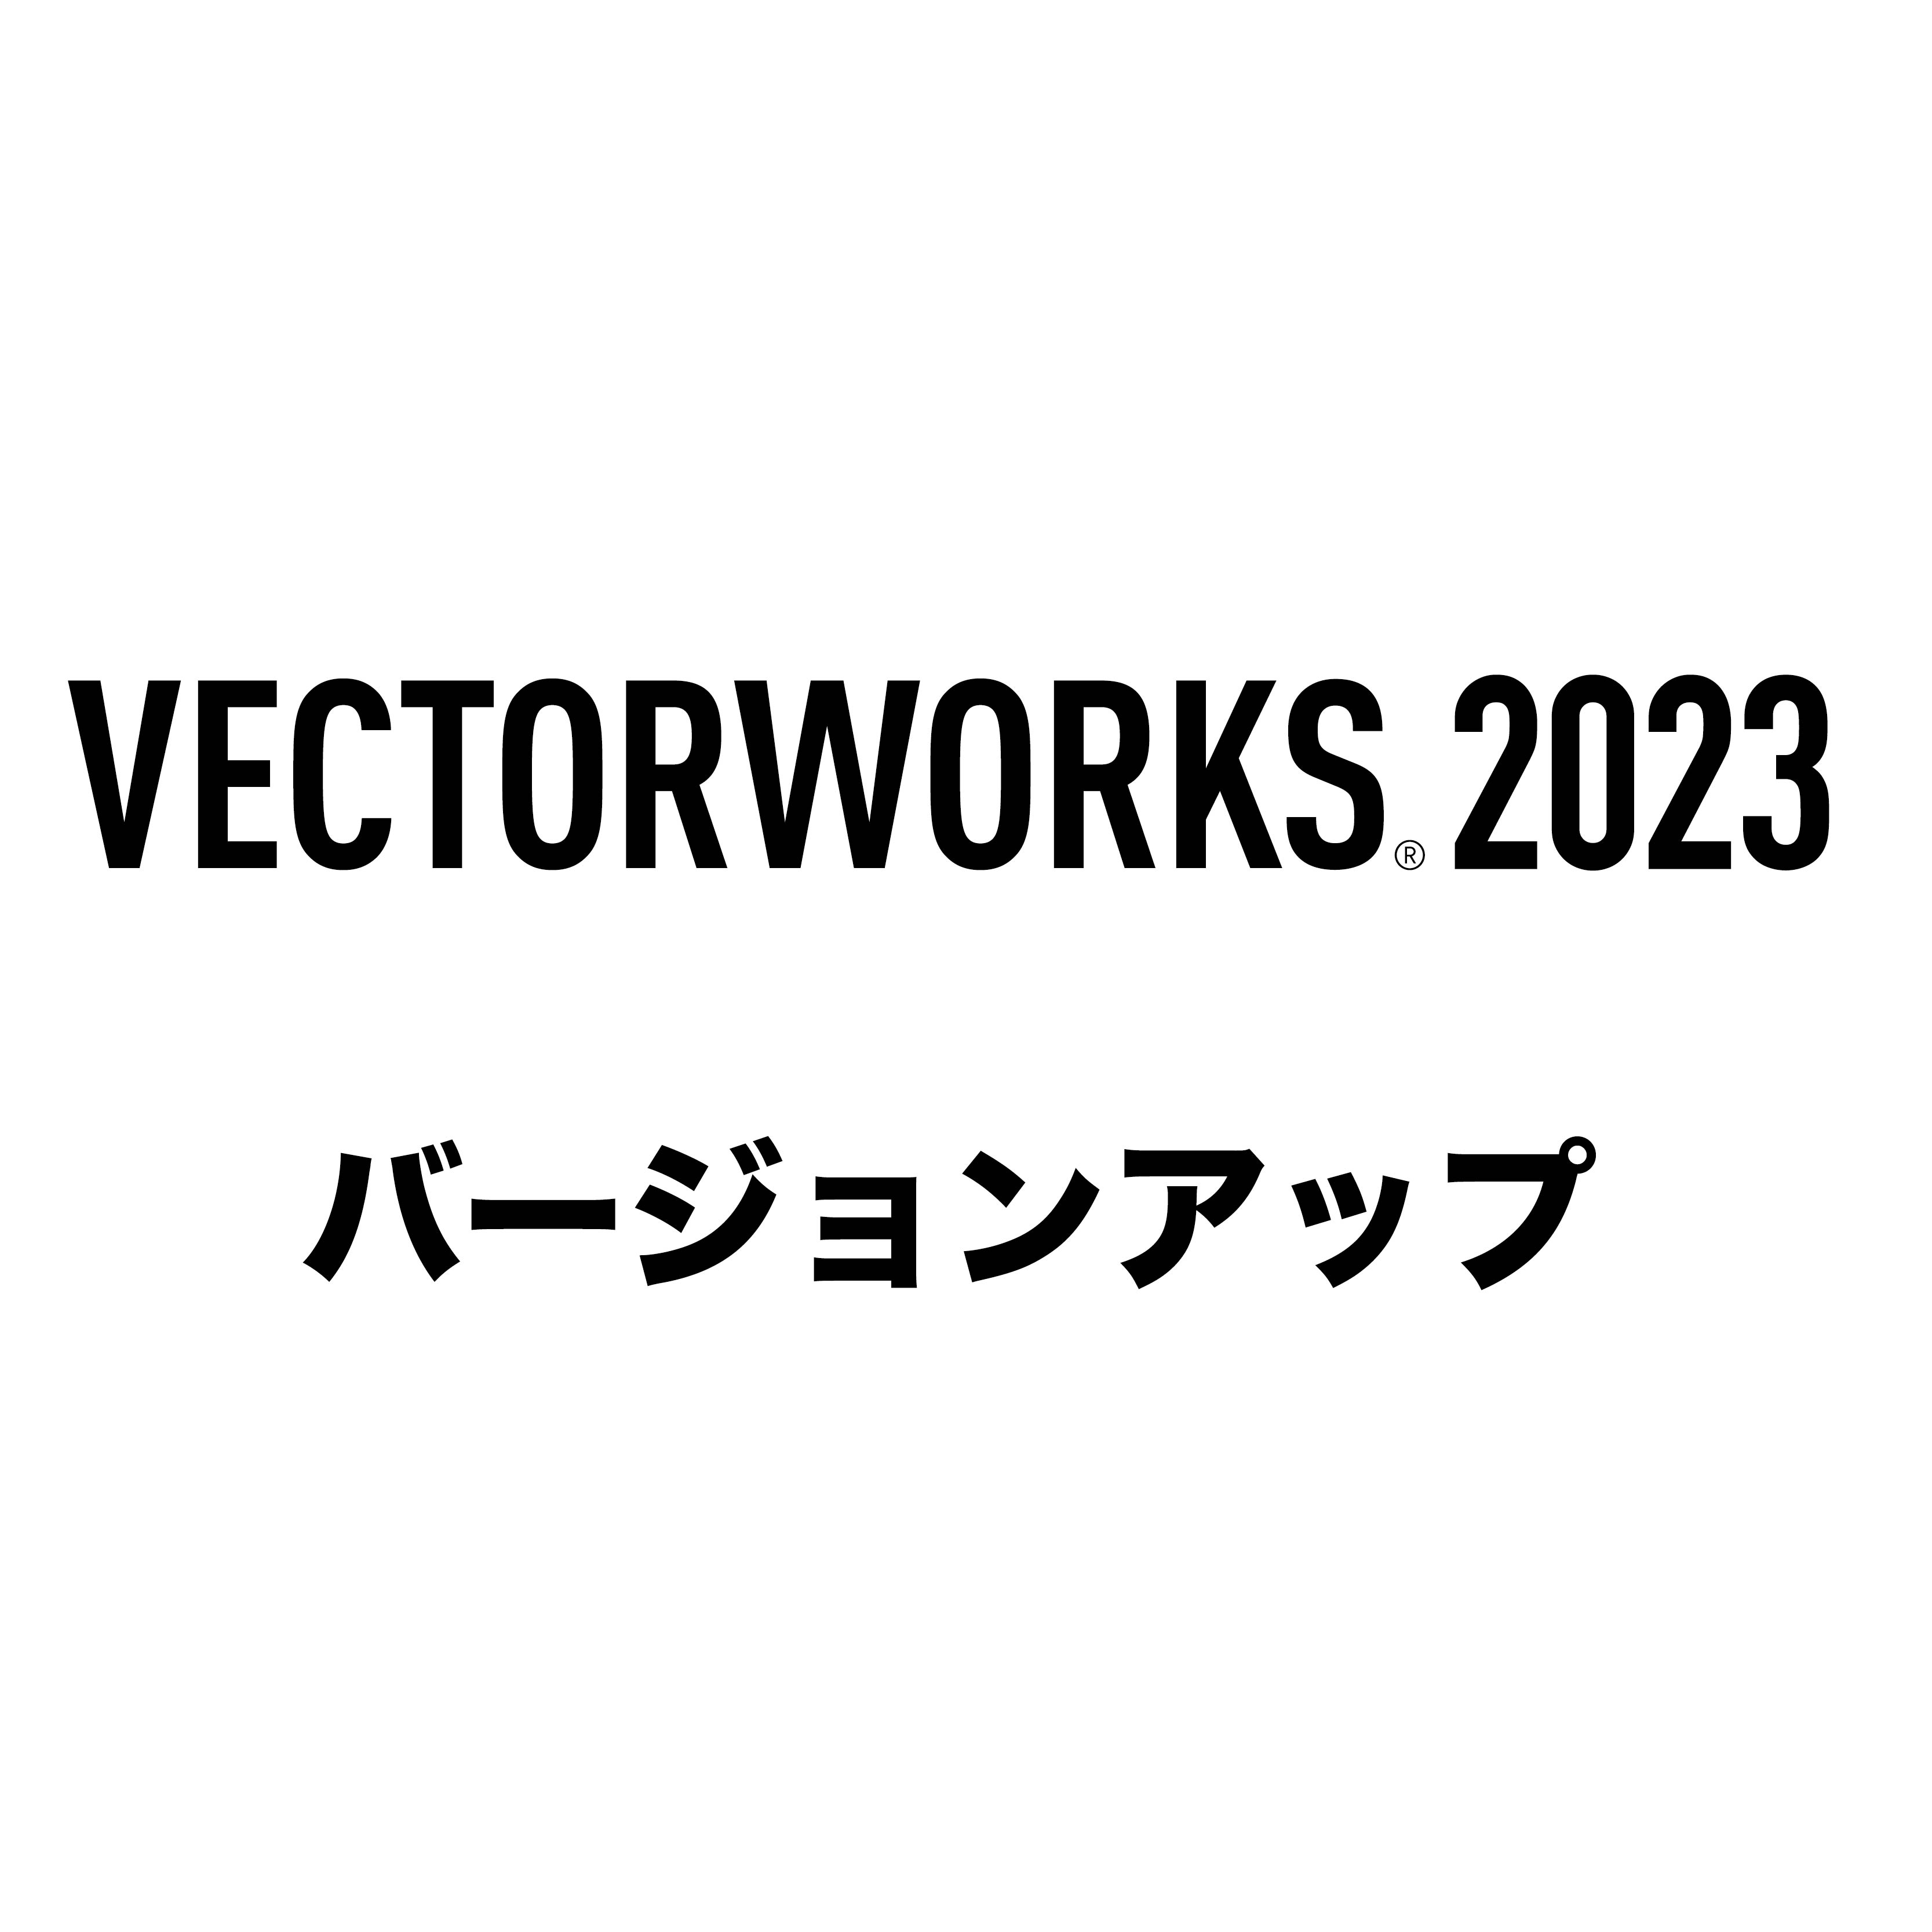 Vectorworks Fundamentals 2023 スタンドアロン版 バージョンアップ（2020→2023） [Vectorworks Service Select同時申込キャンペーン用]